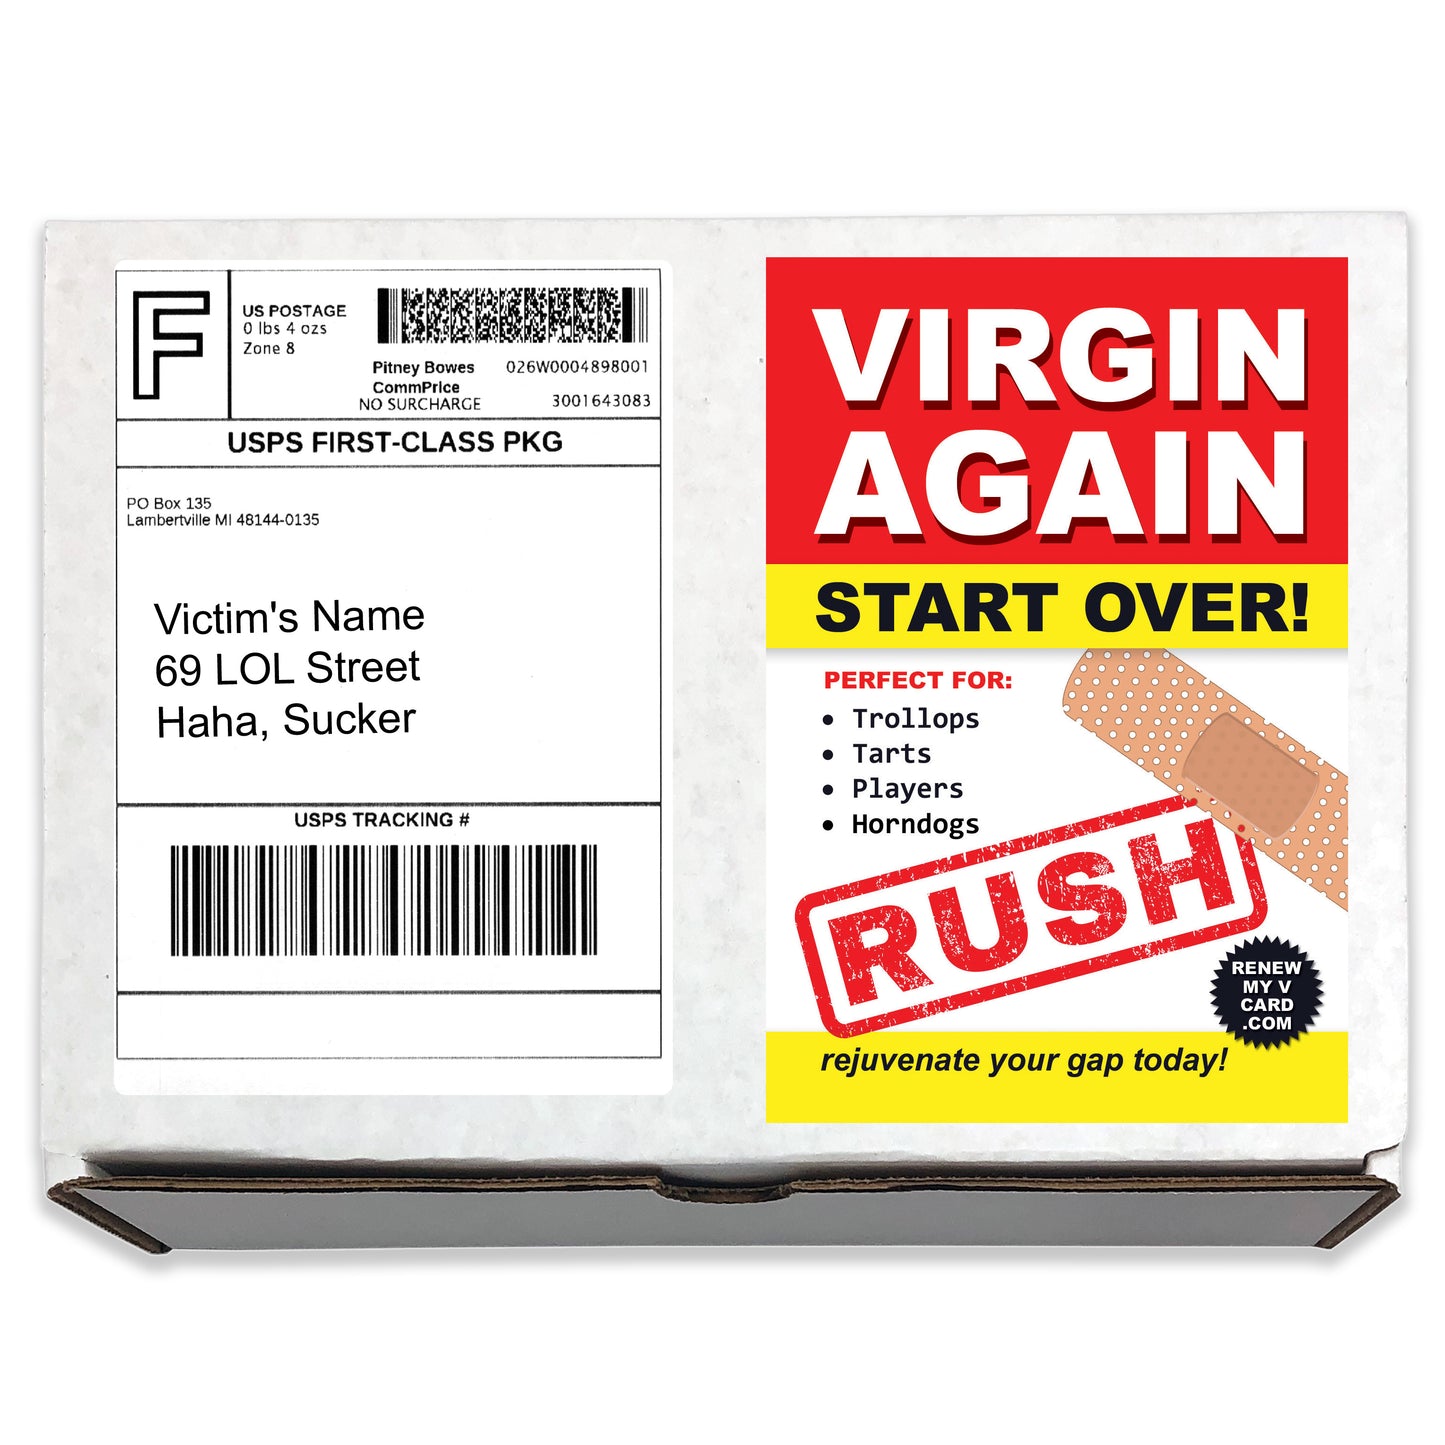 Virgin Again Mail Prank Gag